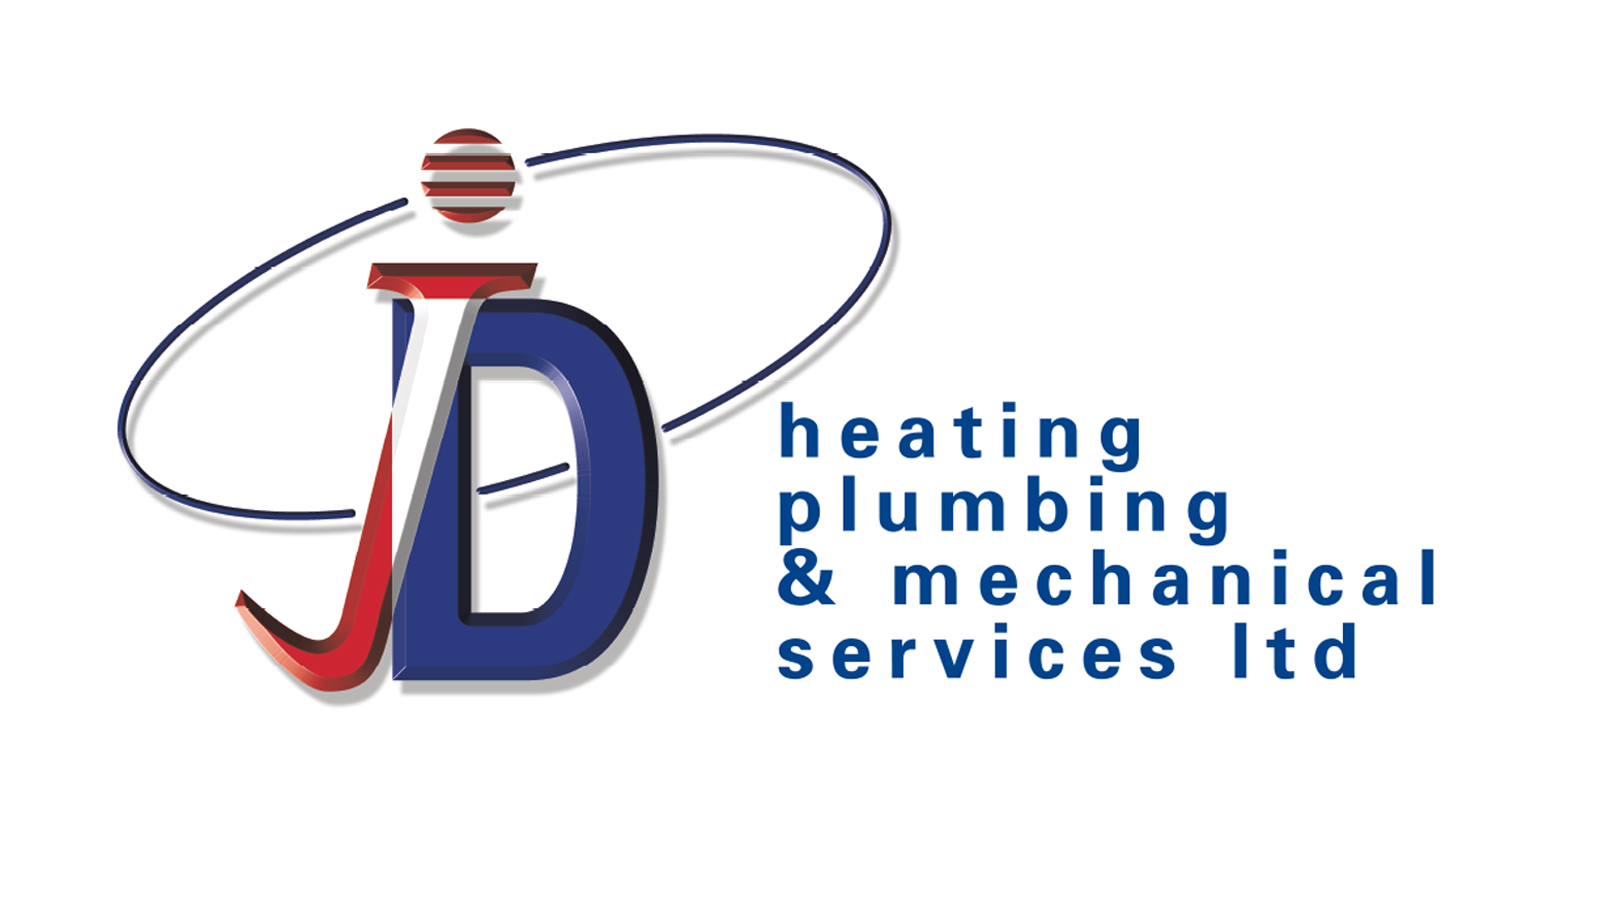 JD Heating, Plumbing & Mechanical Services